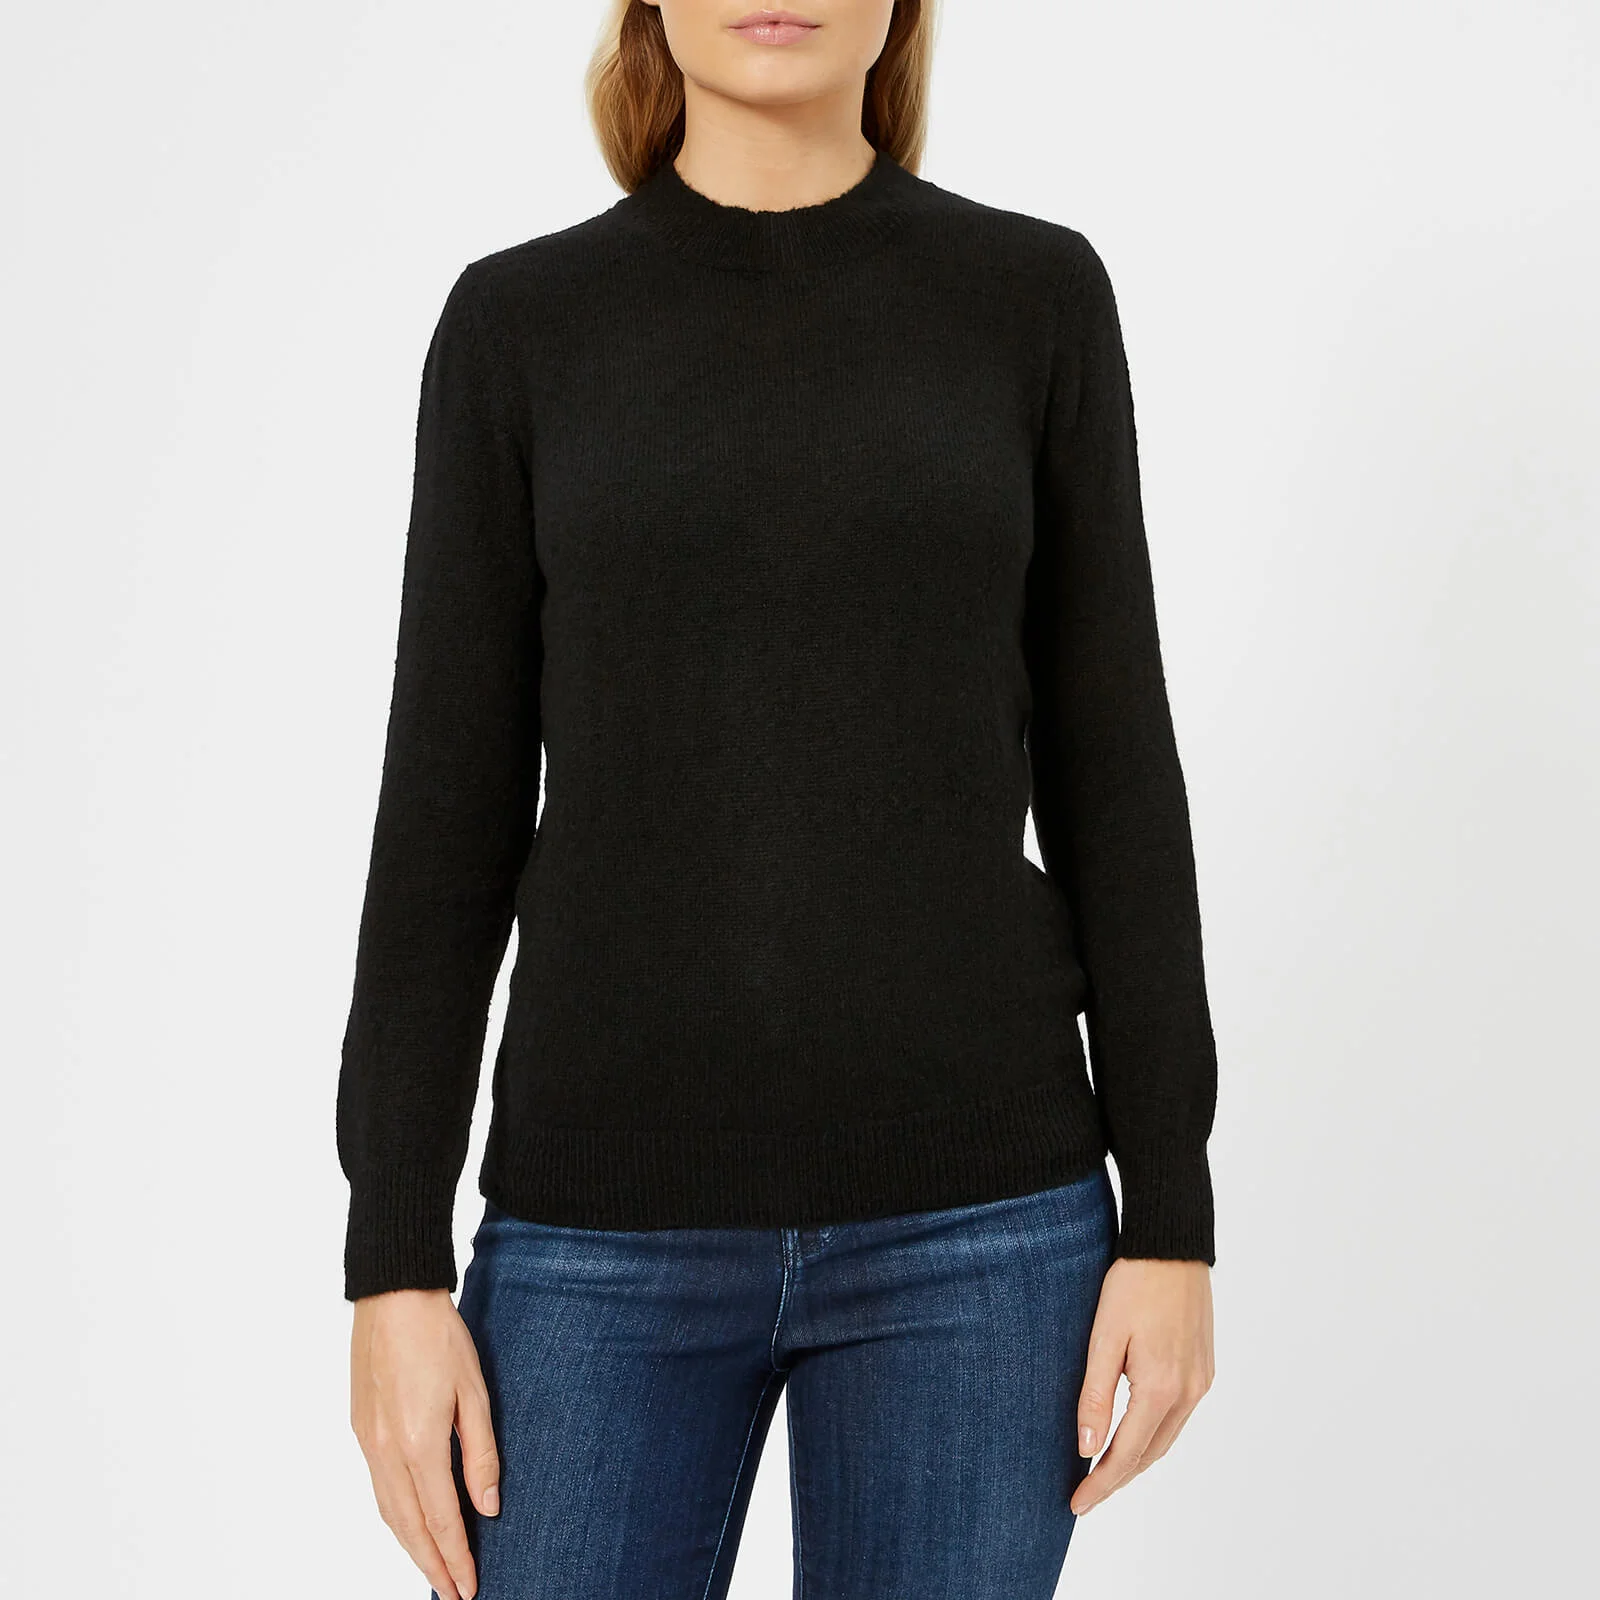 A.P.C. Women's Maia Sweater - Black Image 1